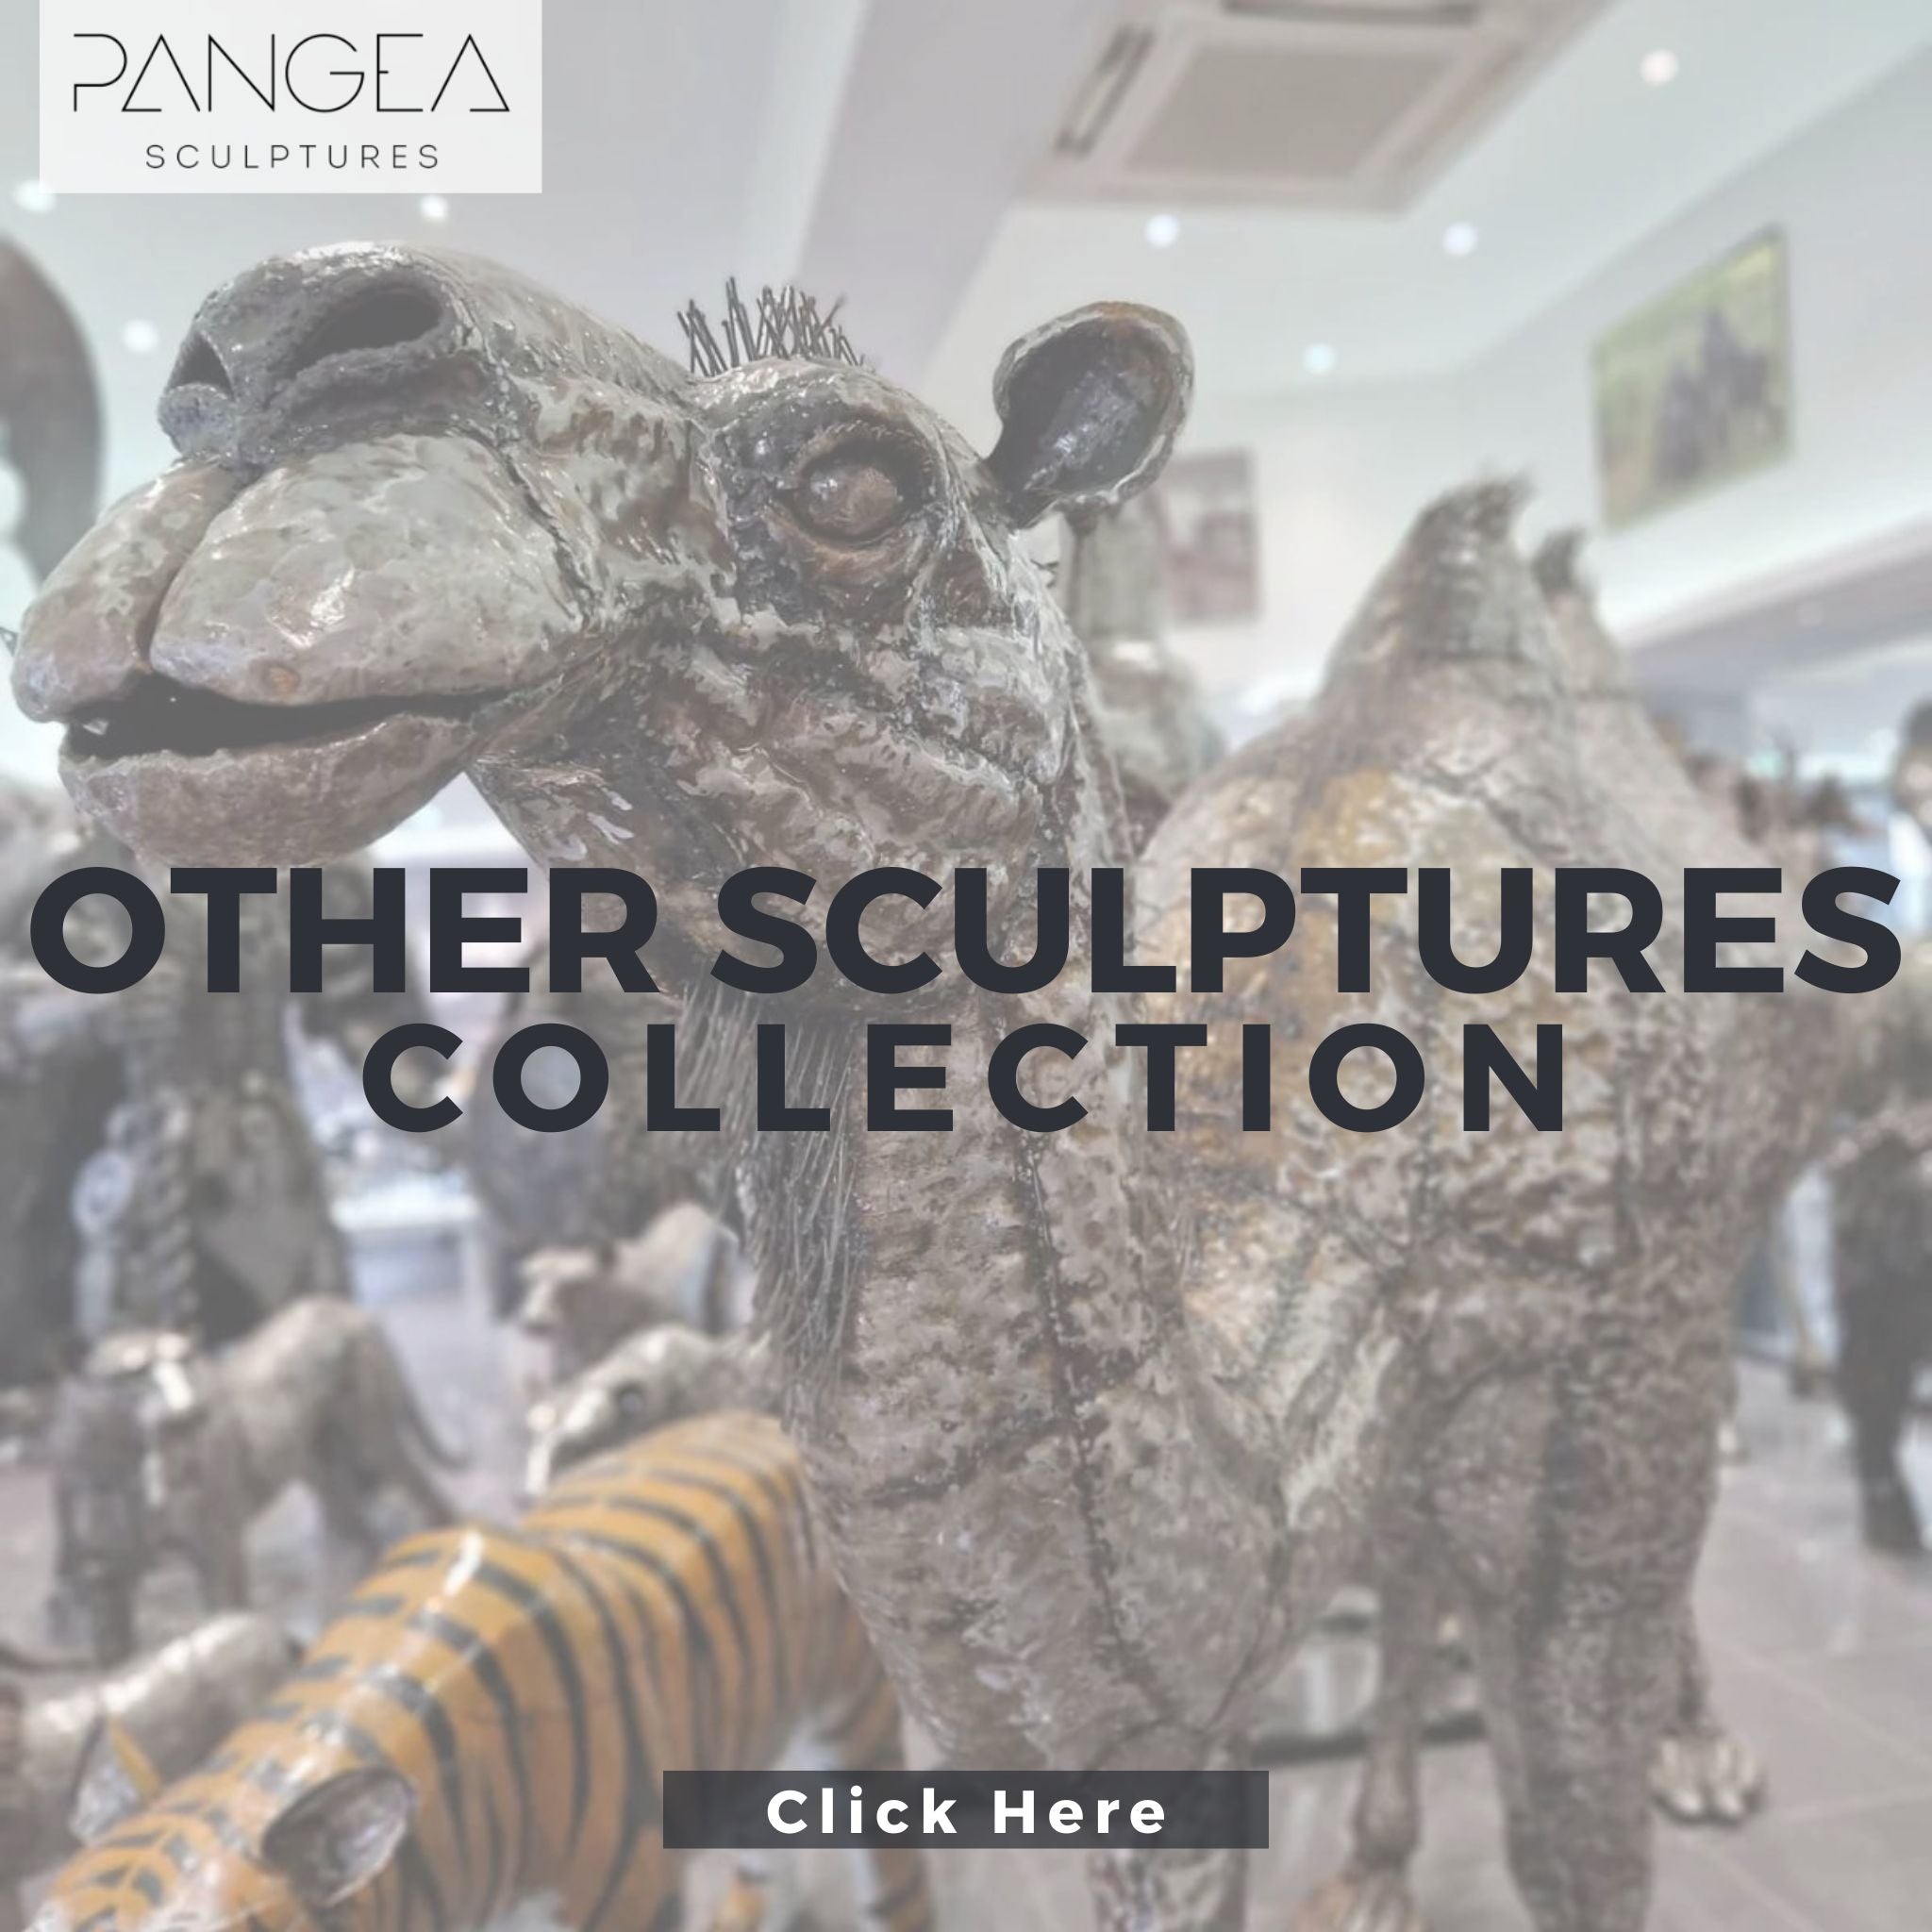 Other Animal Sculptures - Pangea Sculptures